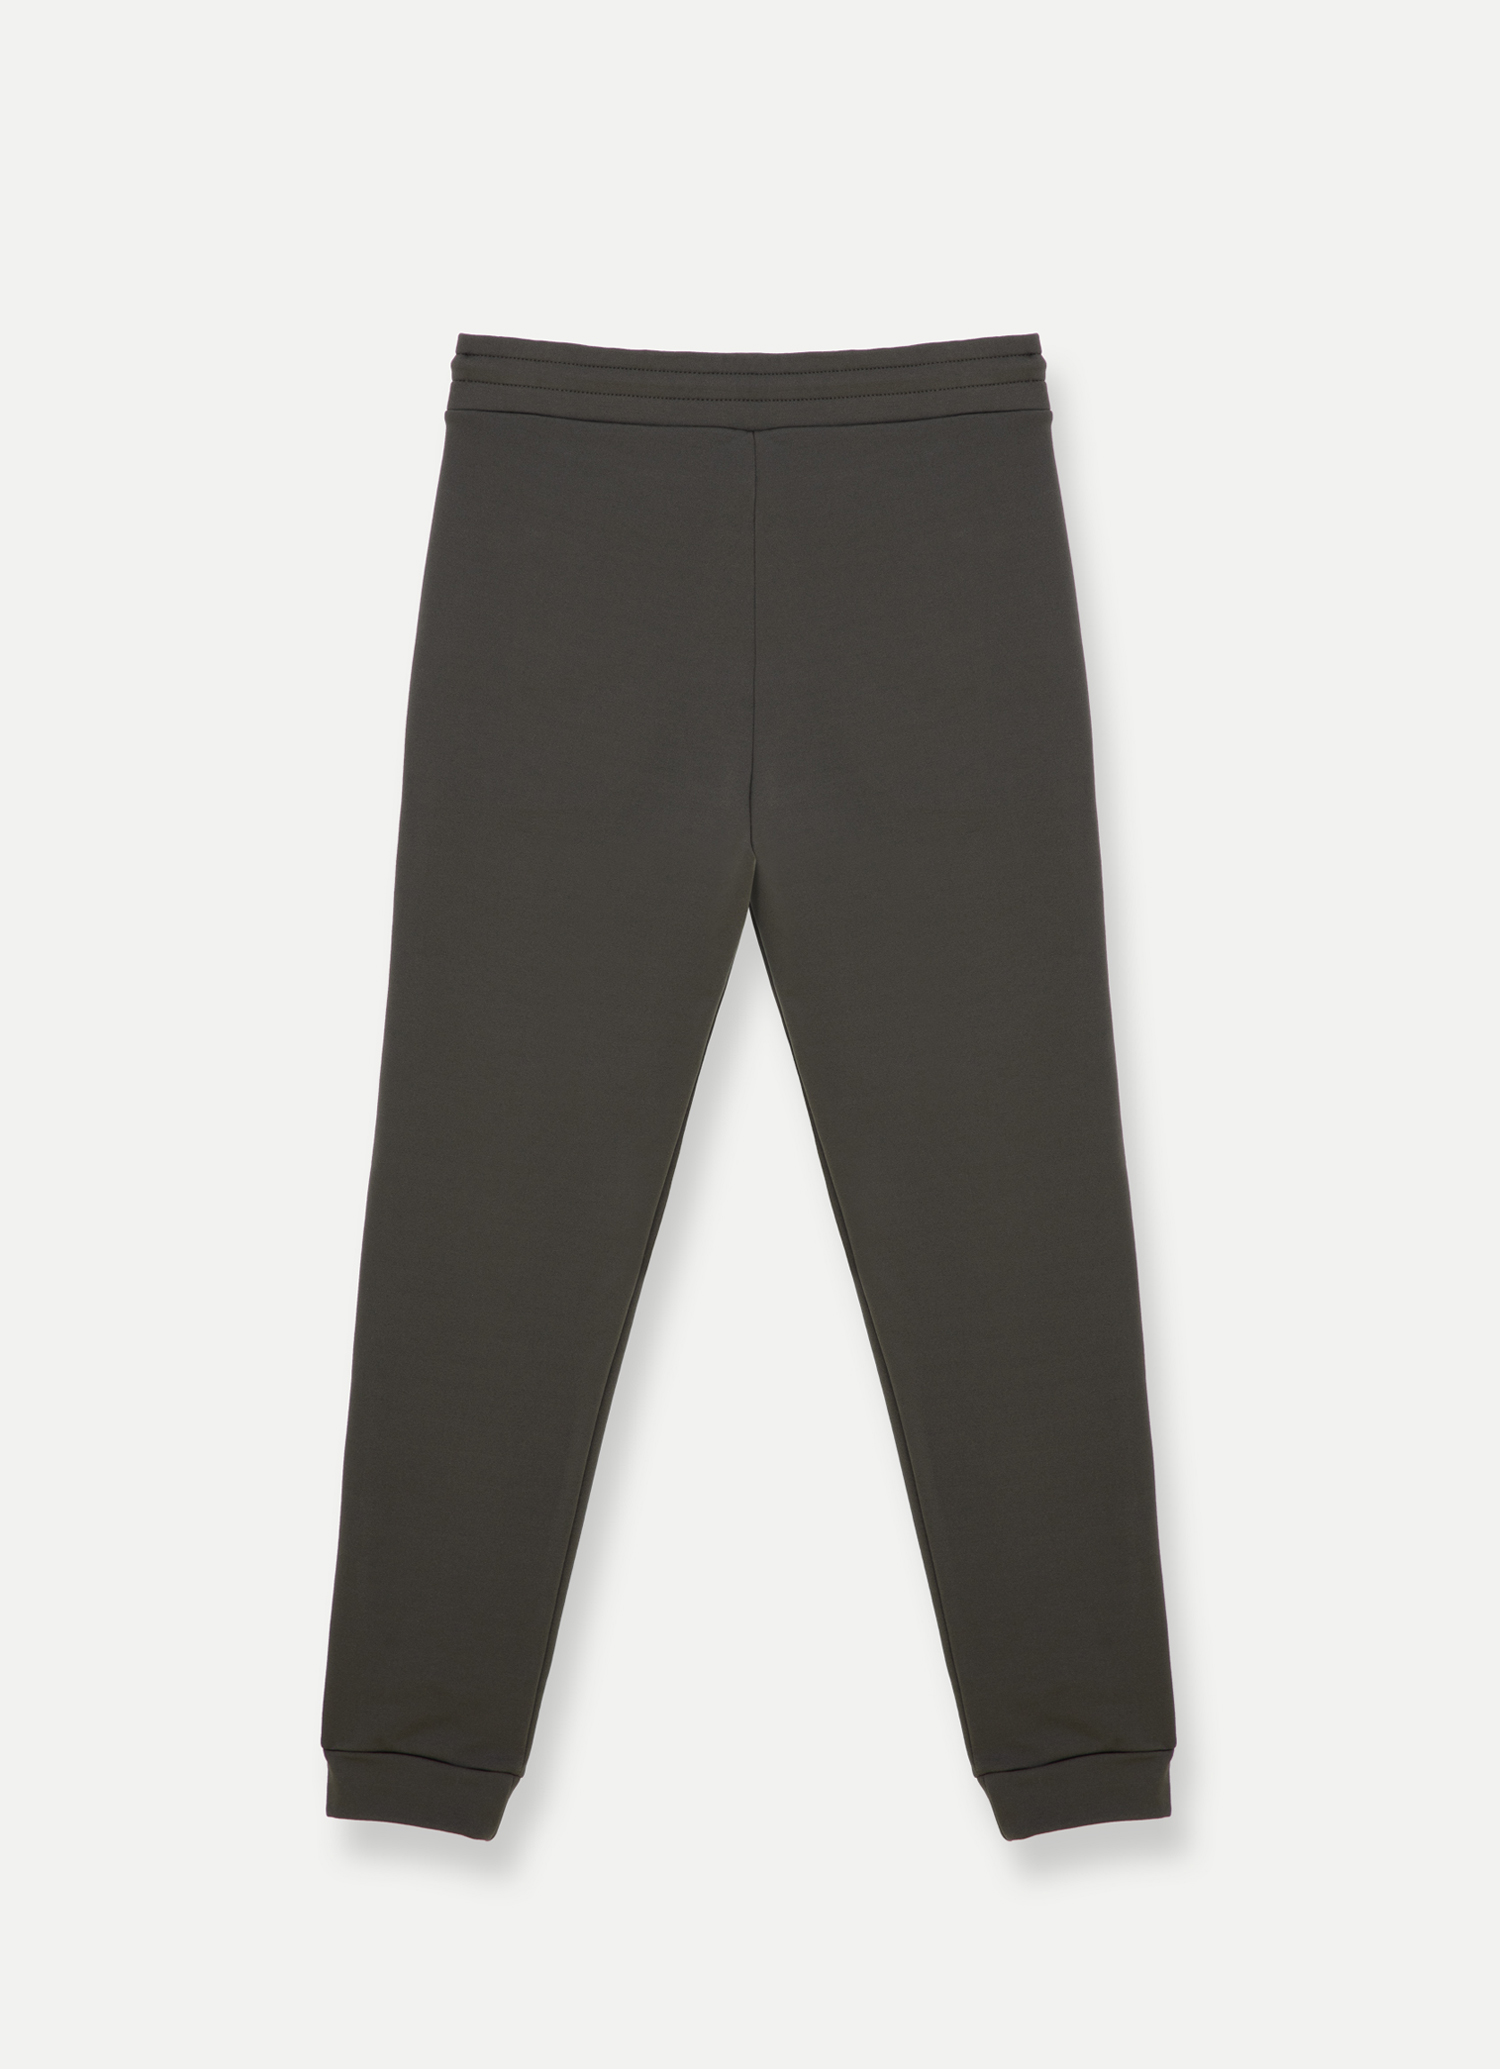 Unlined ski pants with side zips - Colmar